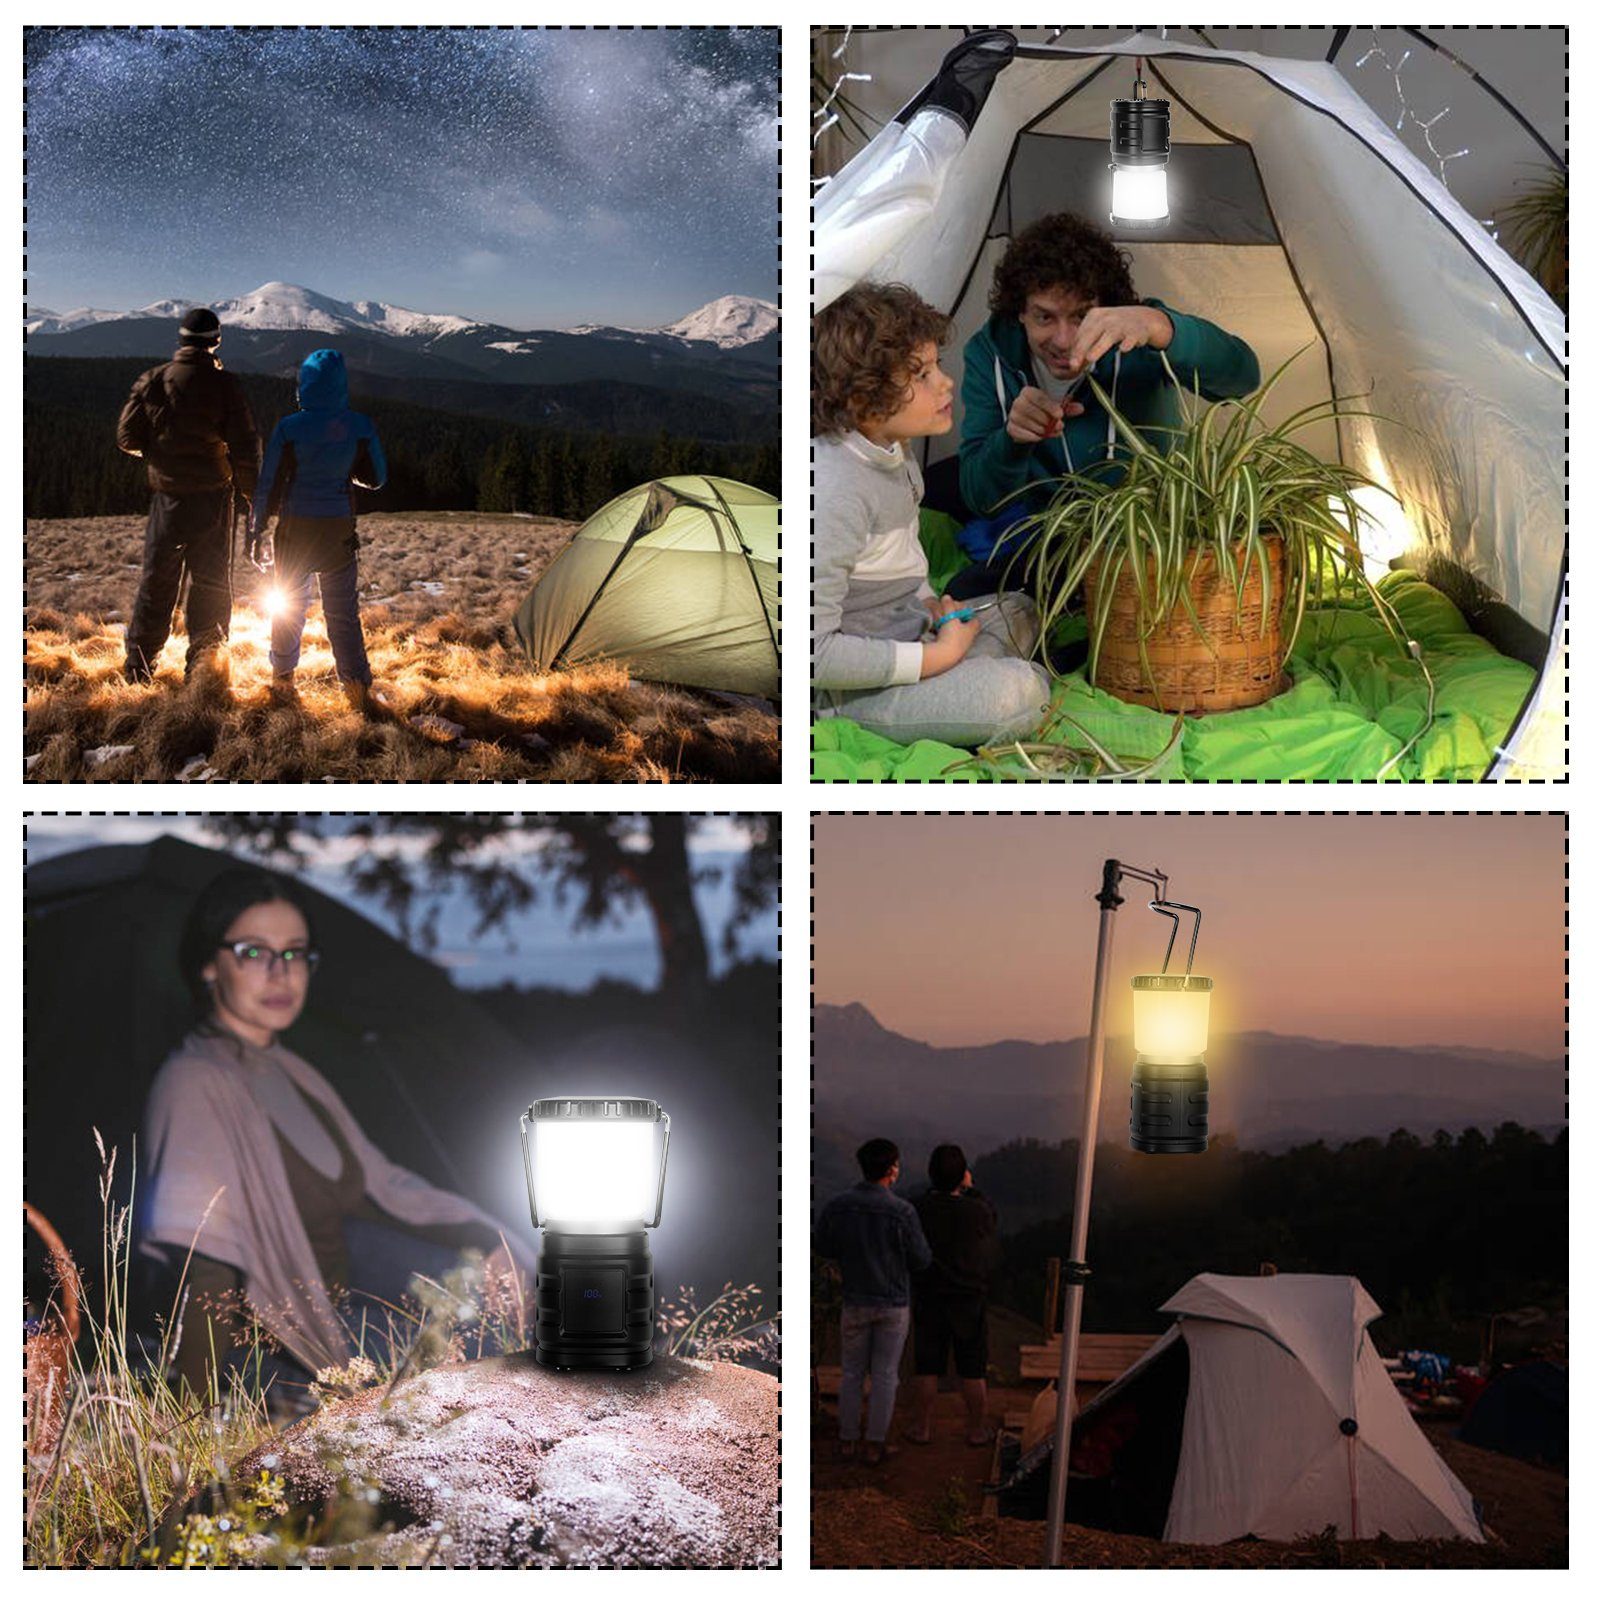 Akku LED LED Lospitch Laterne IP65 Campingleuchte lampe Zeltlampe Outdoor Camping Laterne